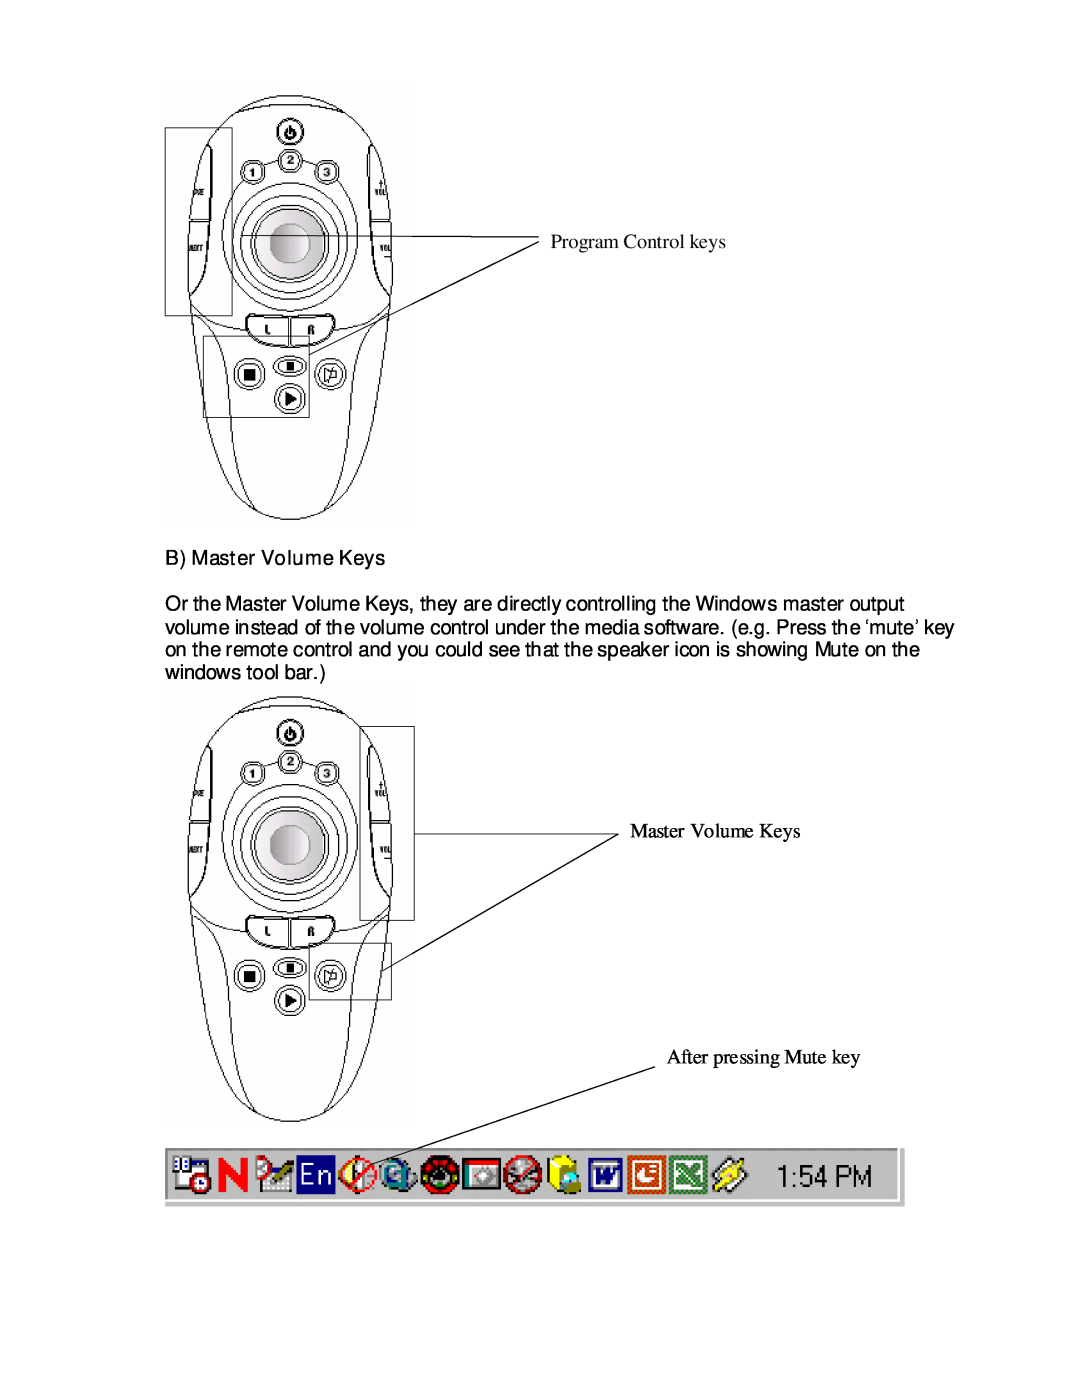 Remotec Multimedia Master Remote Program Control keys, B Master Volume Keys, Master Volume Keys After pressing Mute key 